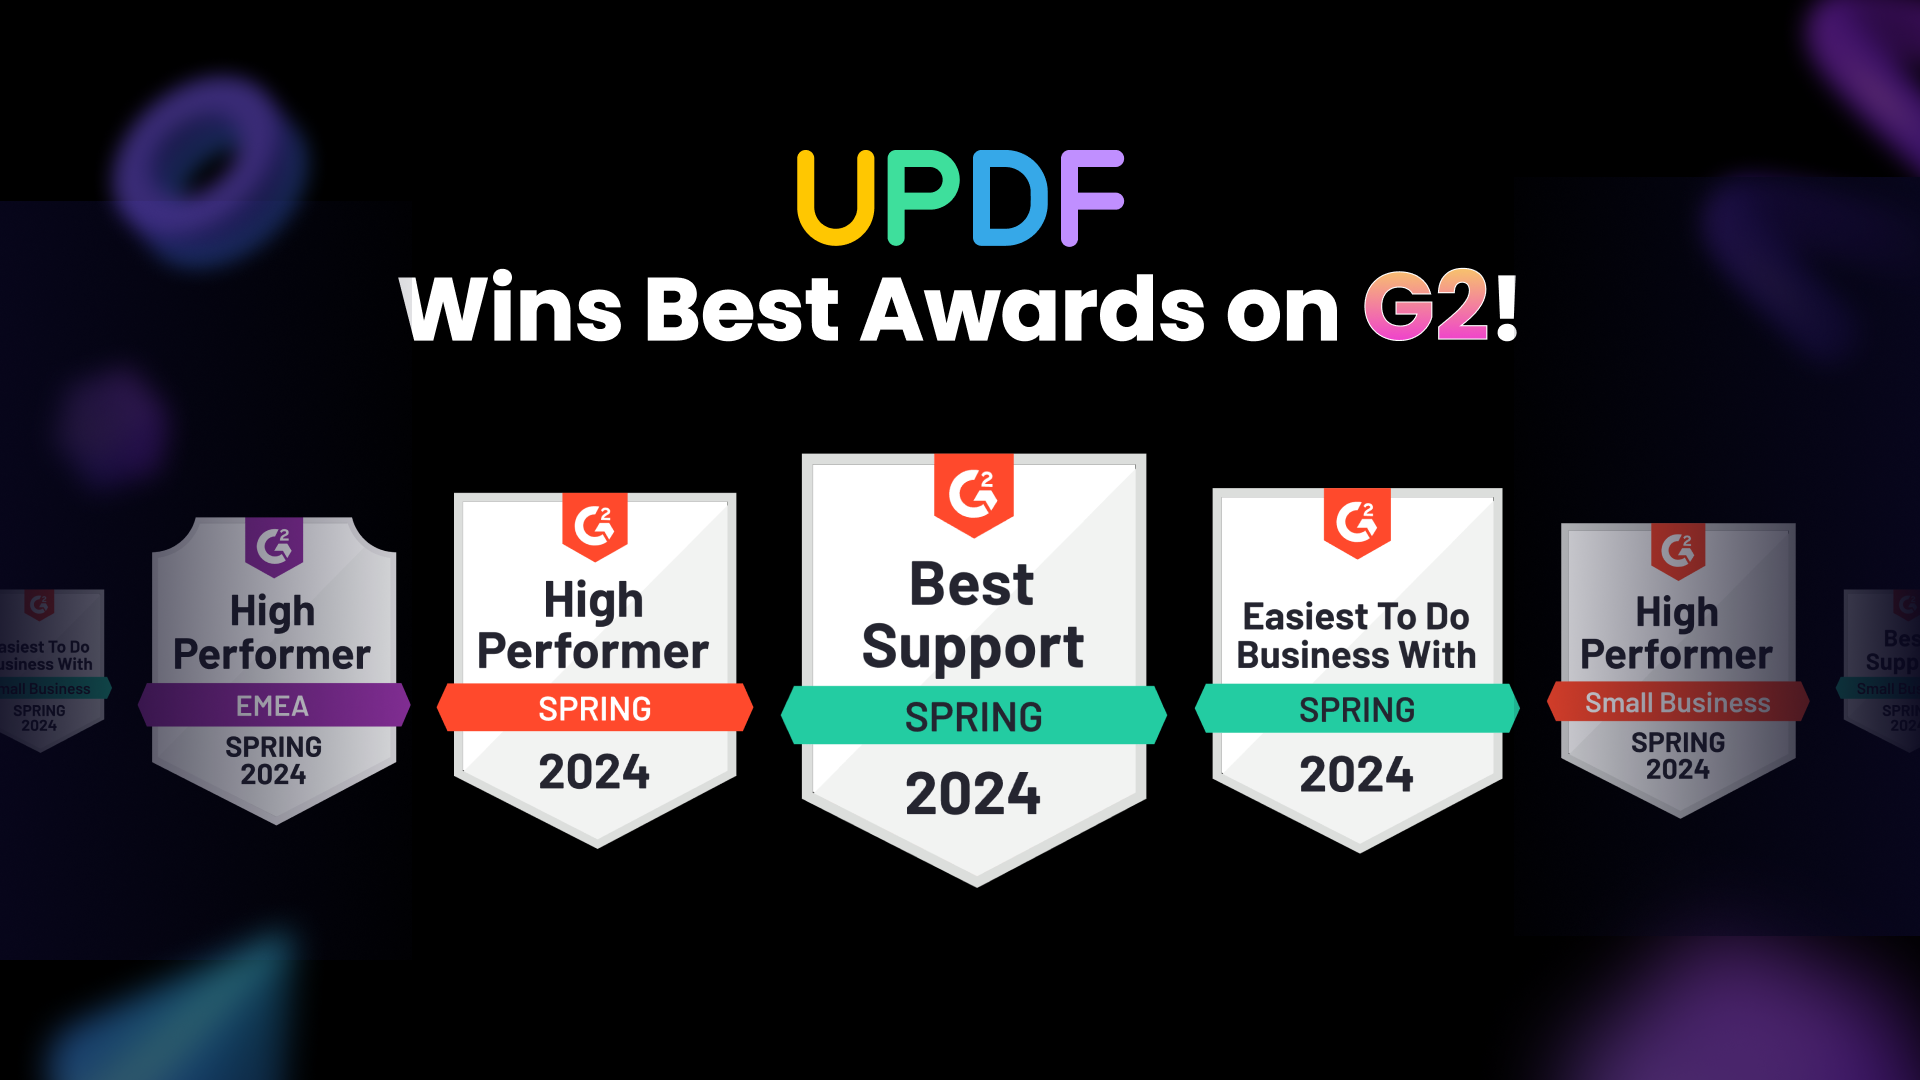 UPDF Wins Best Awards on G2 Spring 2024 Report!